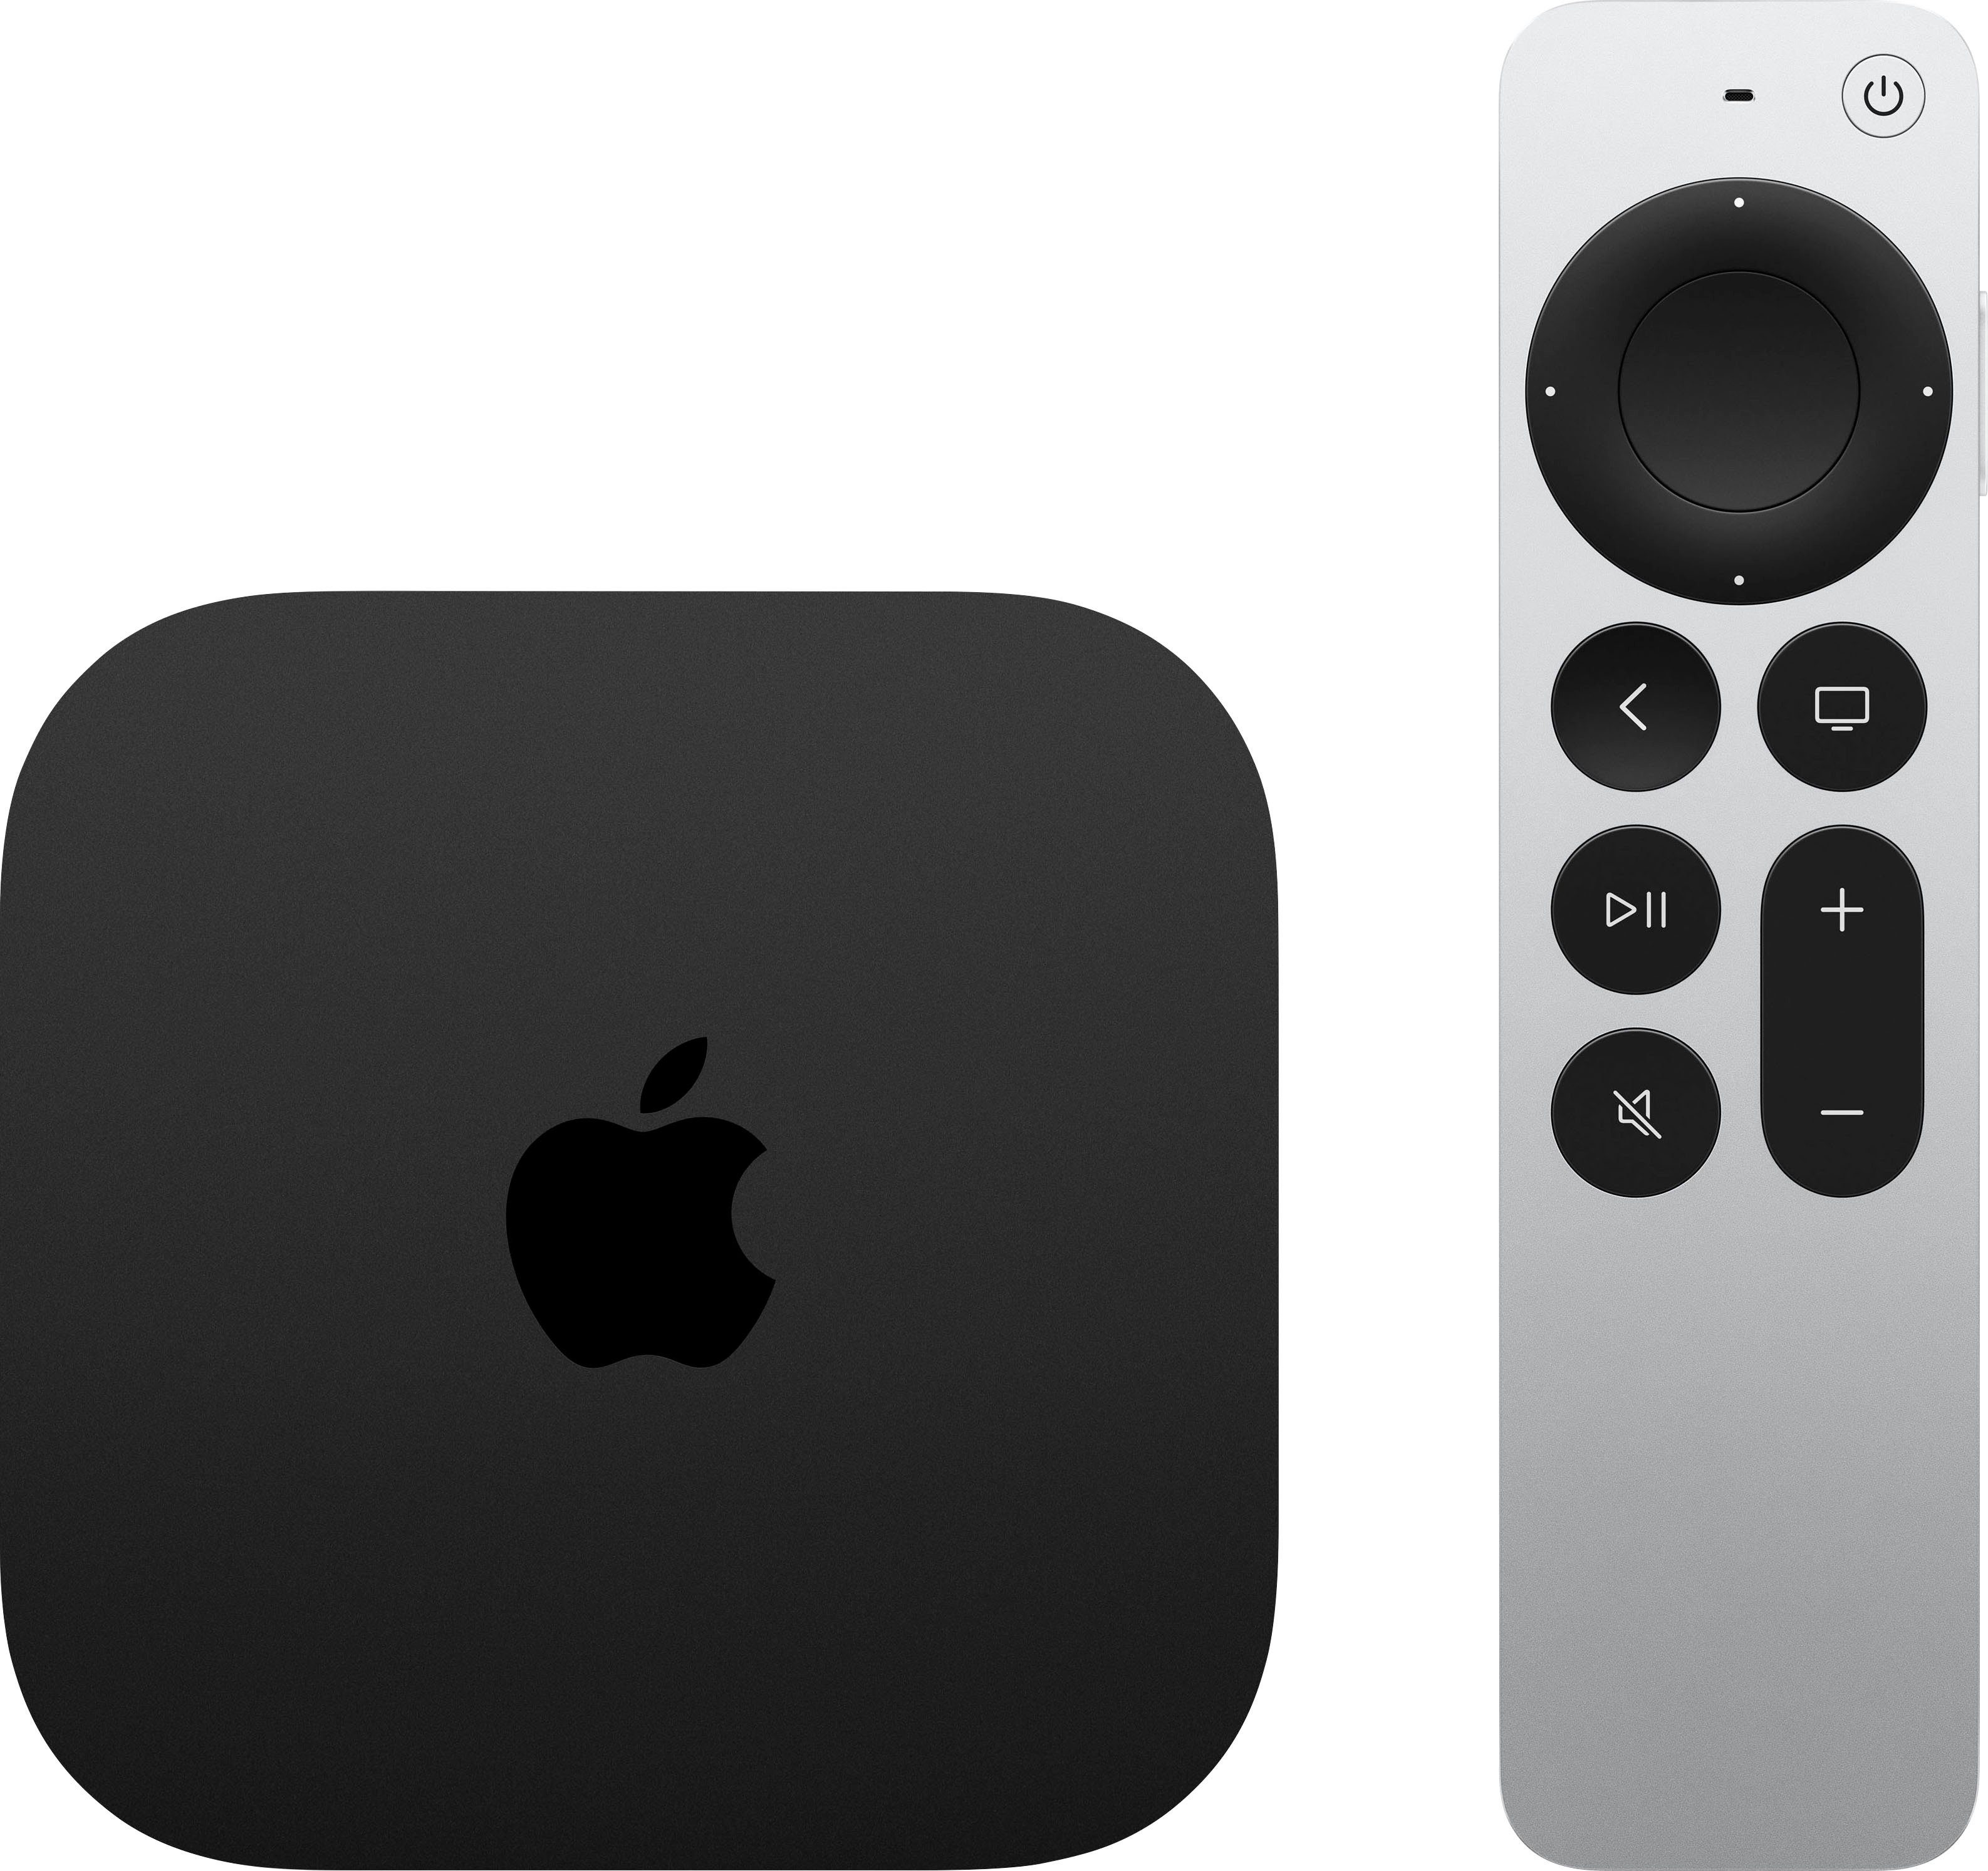 Wi‑Fi + Ethernet 128GB (3rd Apple TV 4K Gen) Streaming-Box